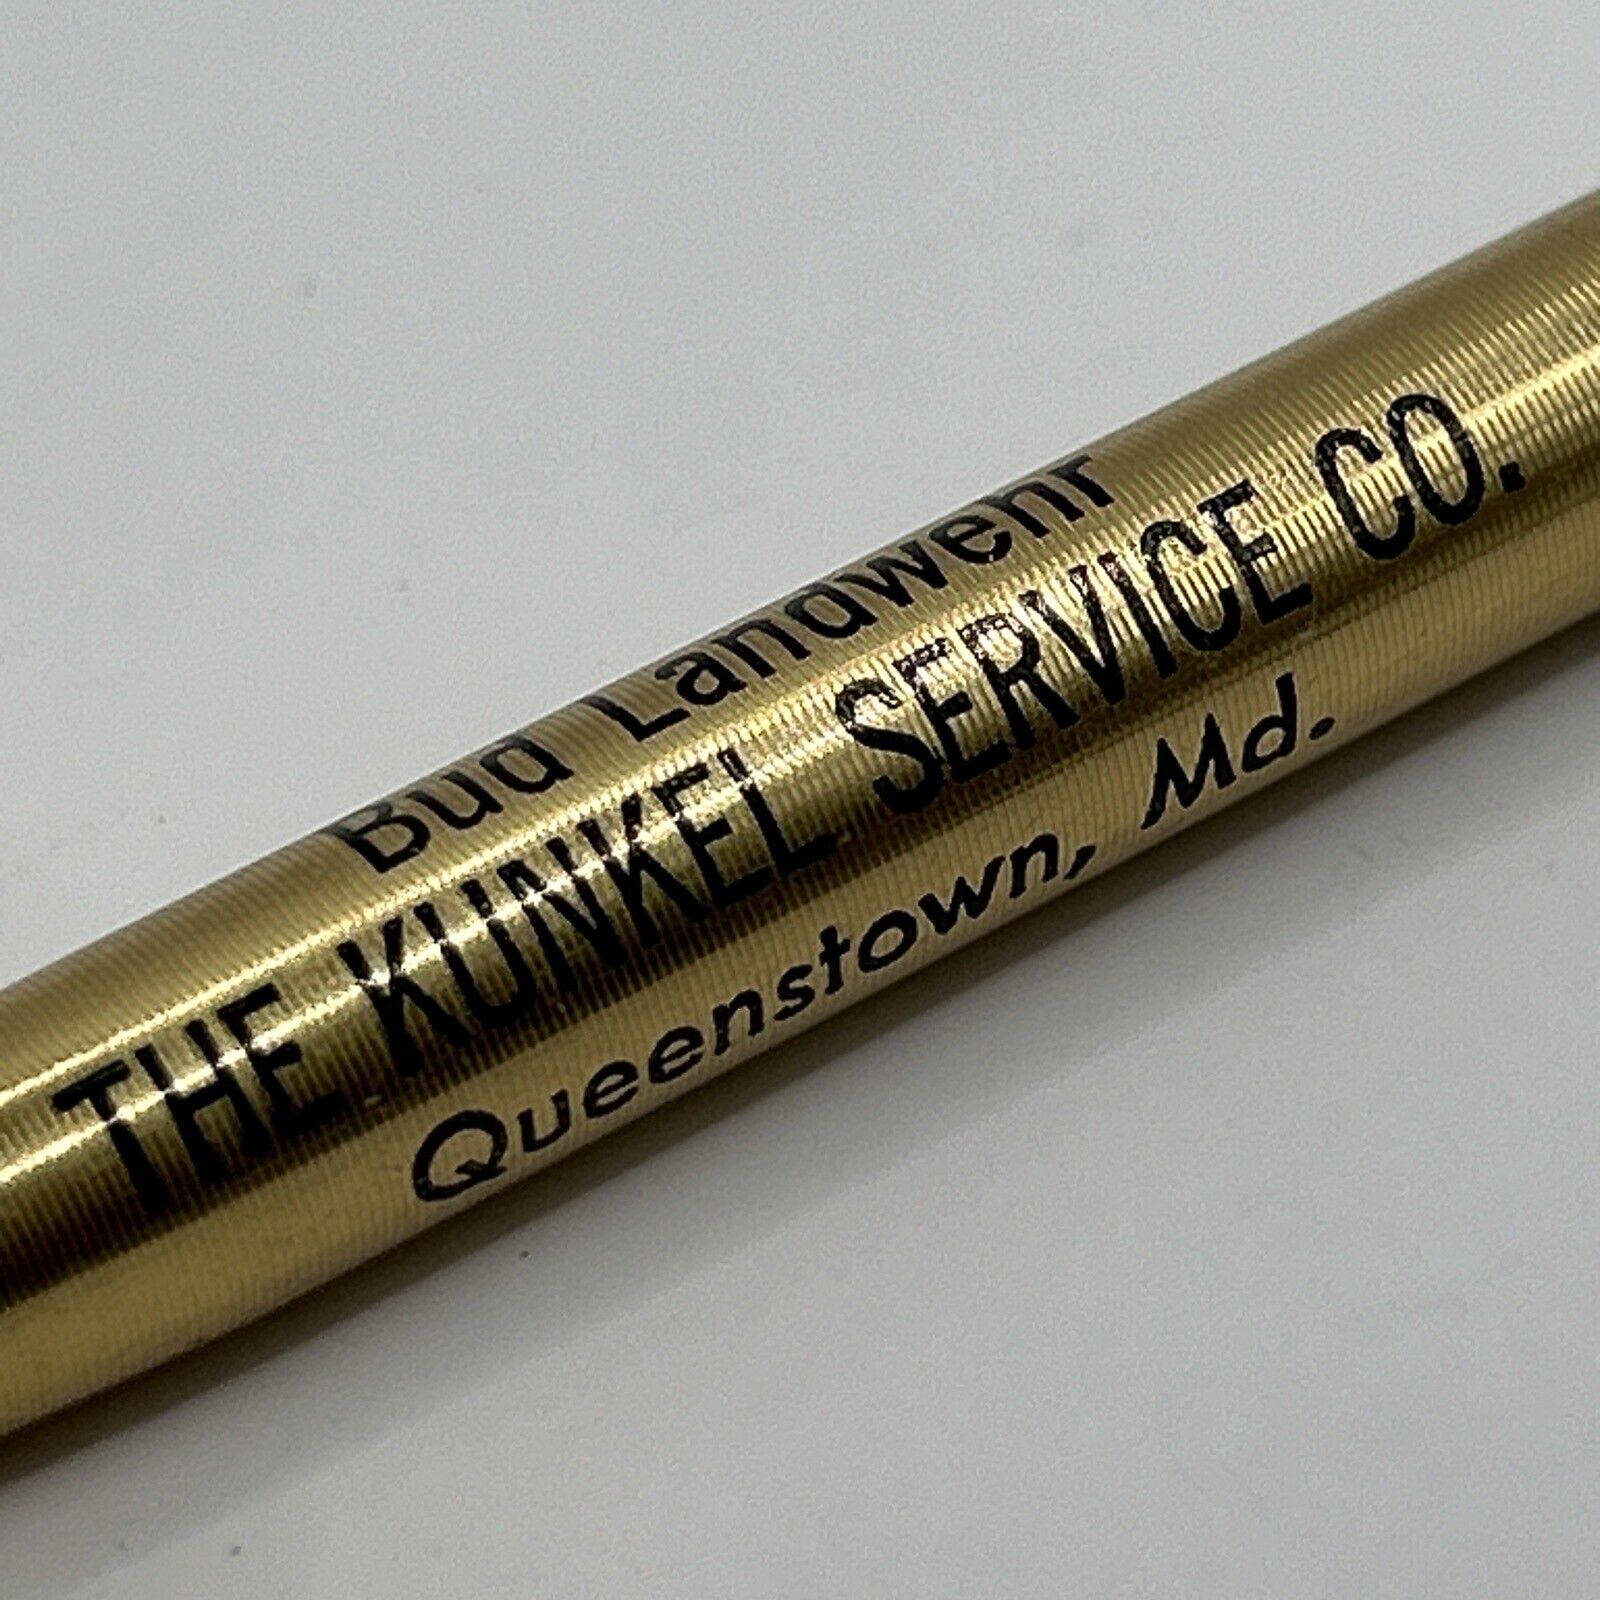 VTG Ballpoint Pen The Kunkel Service Co. Bud Landwehr Queenstown MD